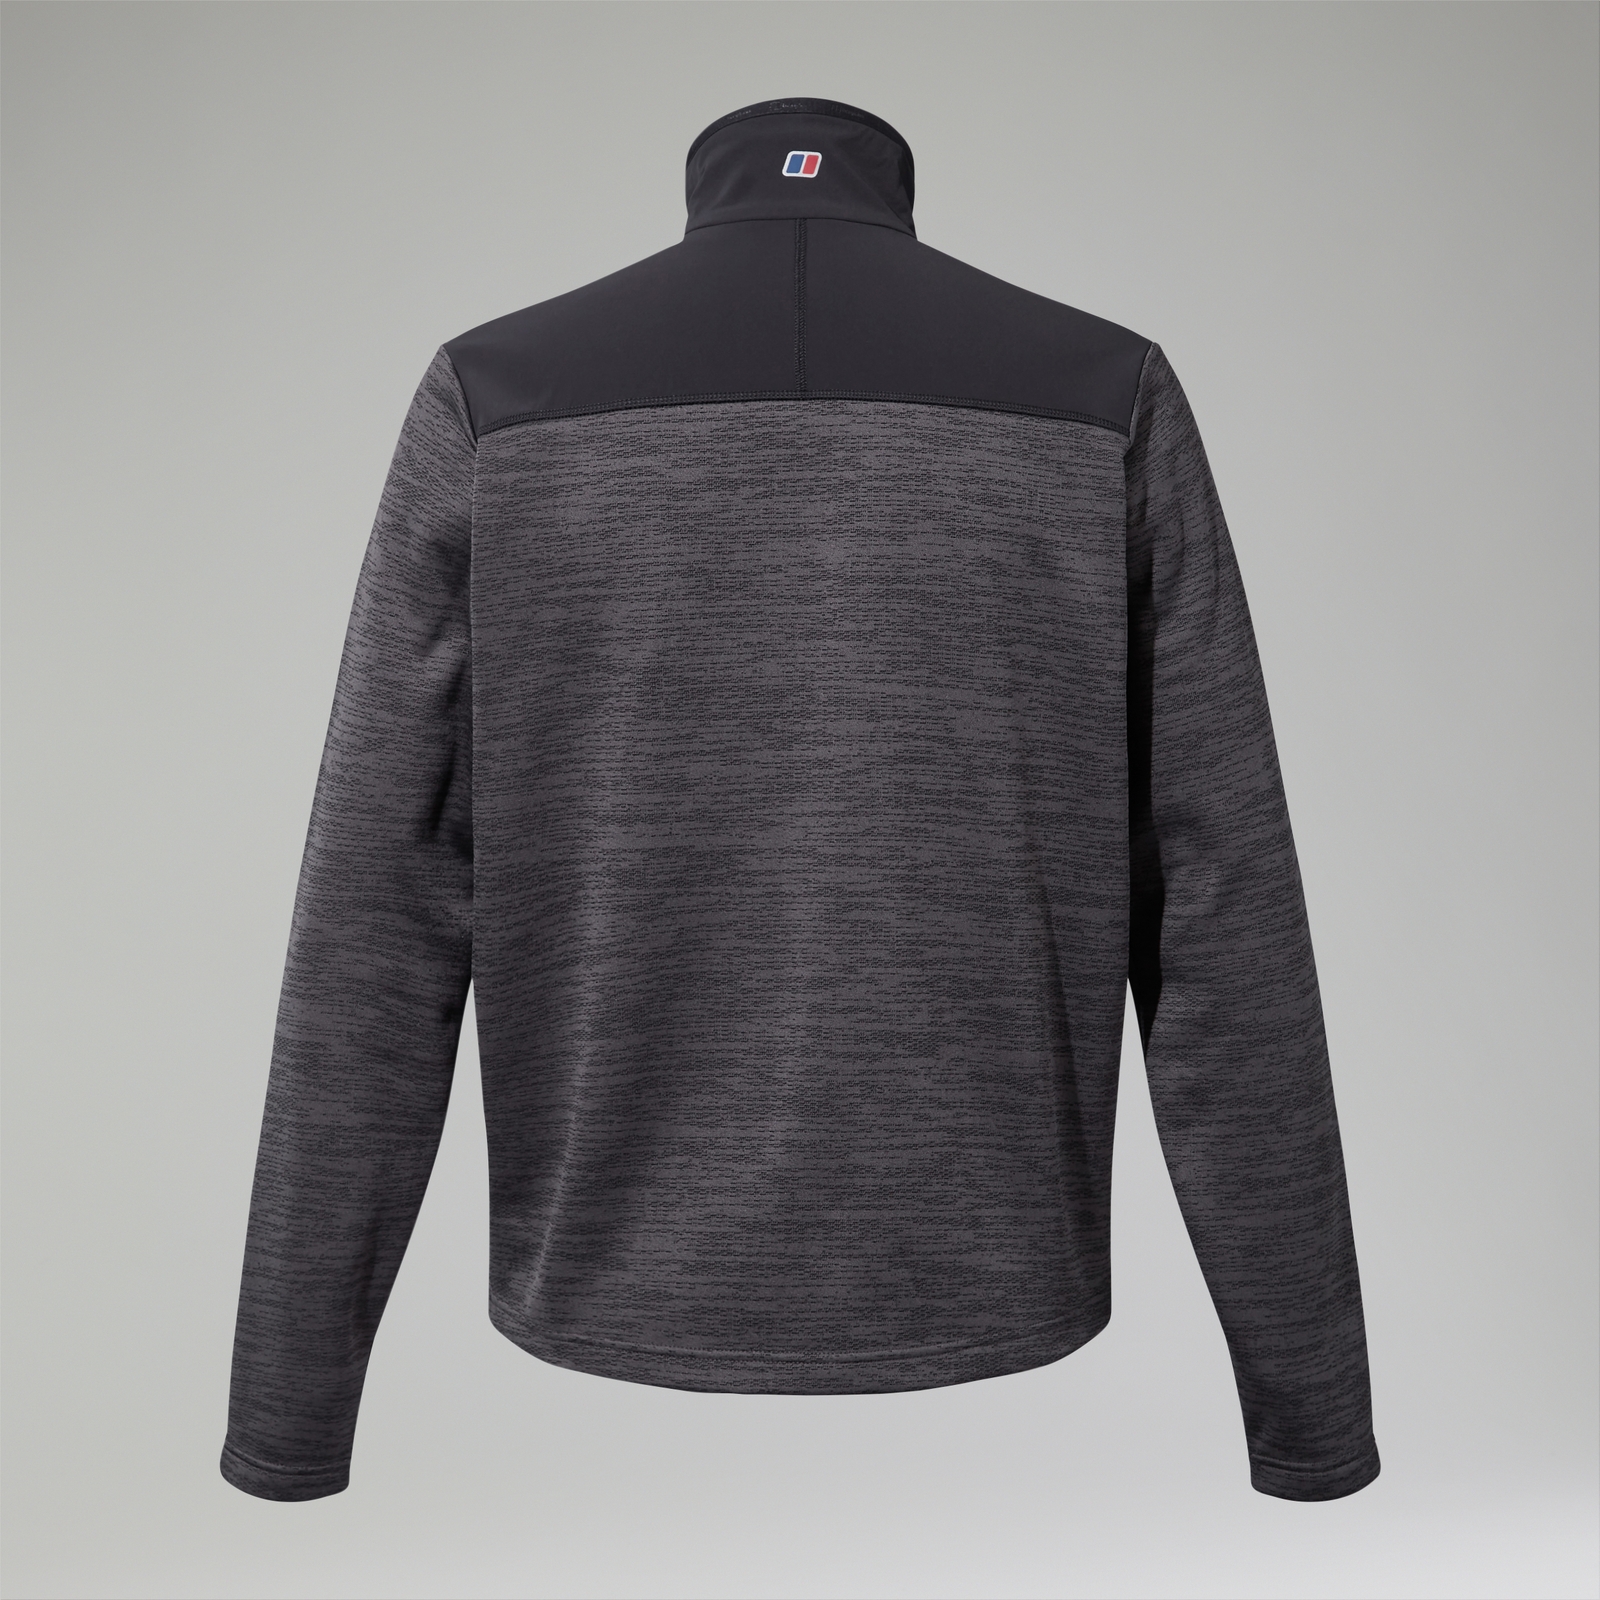 Men’s Reacon Sweater Grey/Black